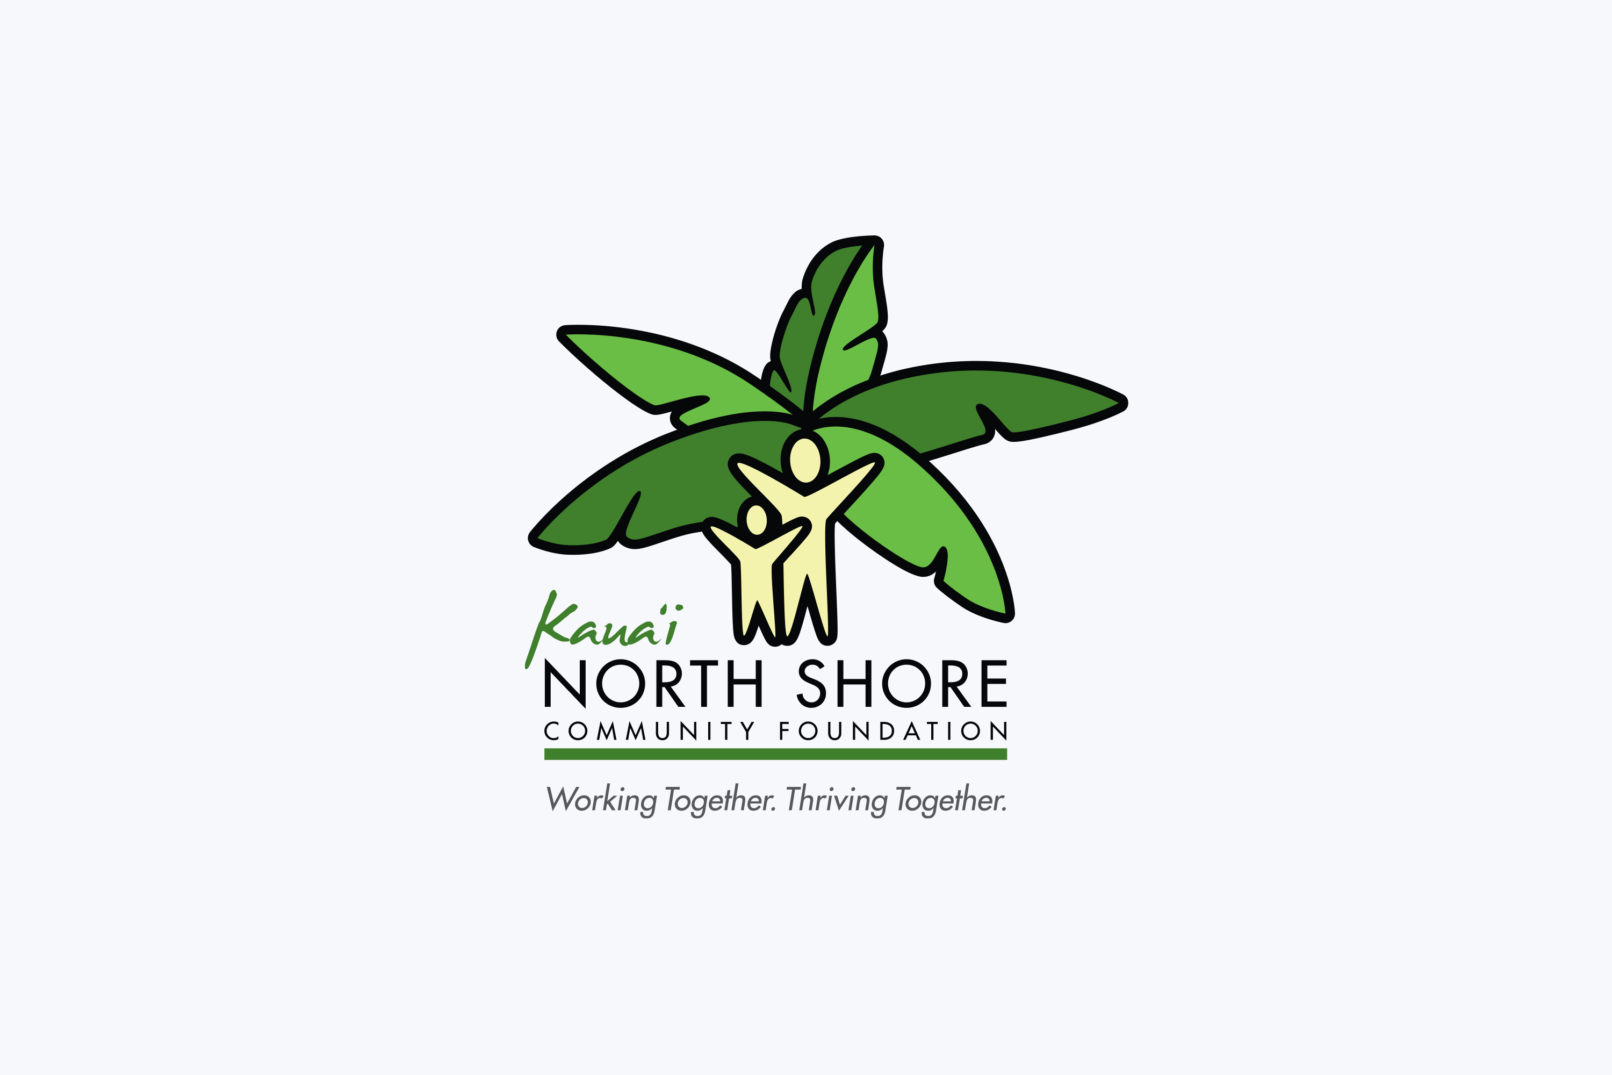 kauai north shore community foundation logo design